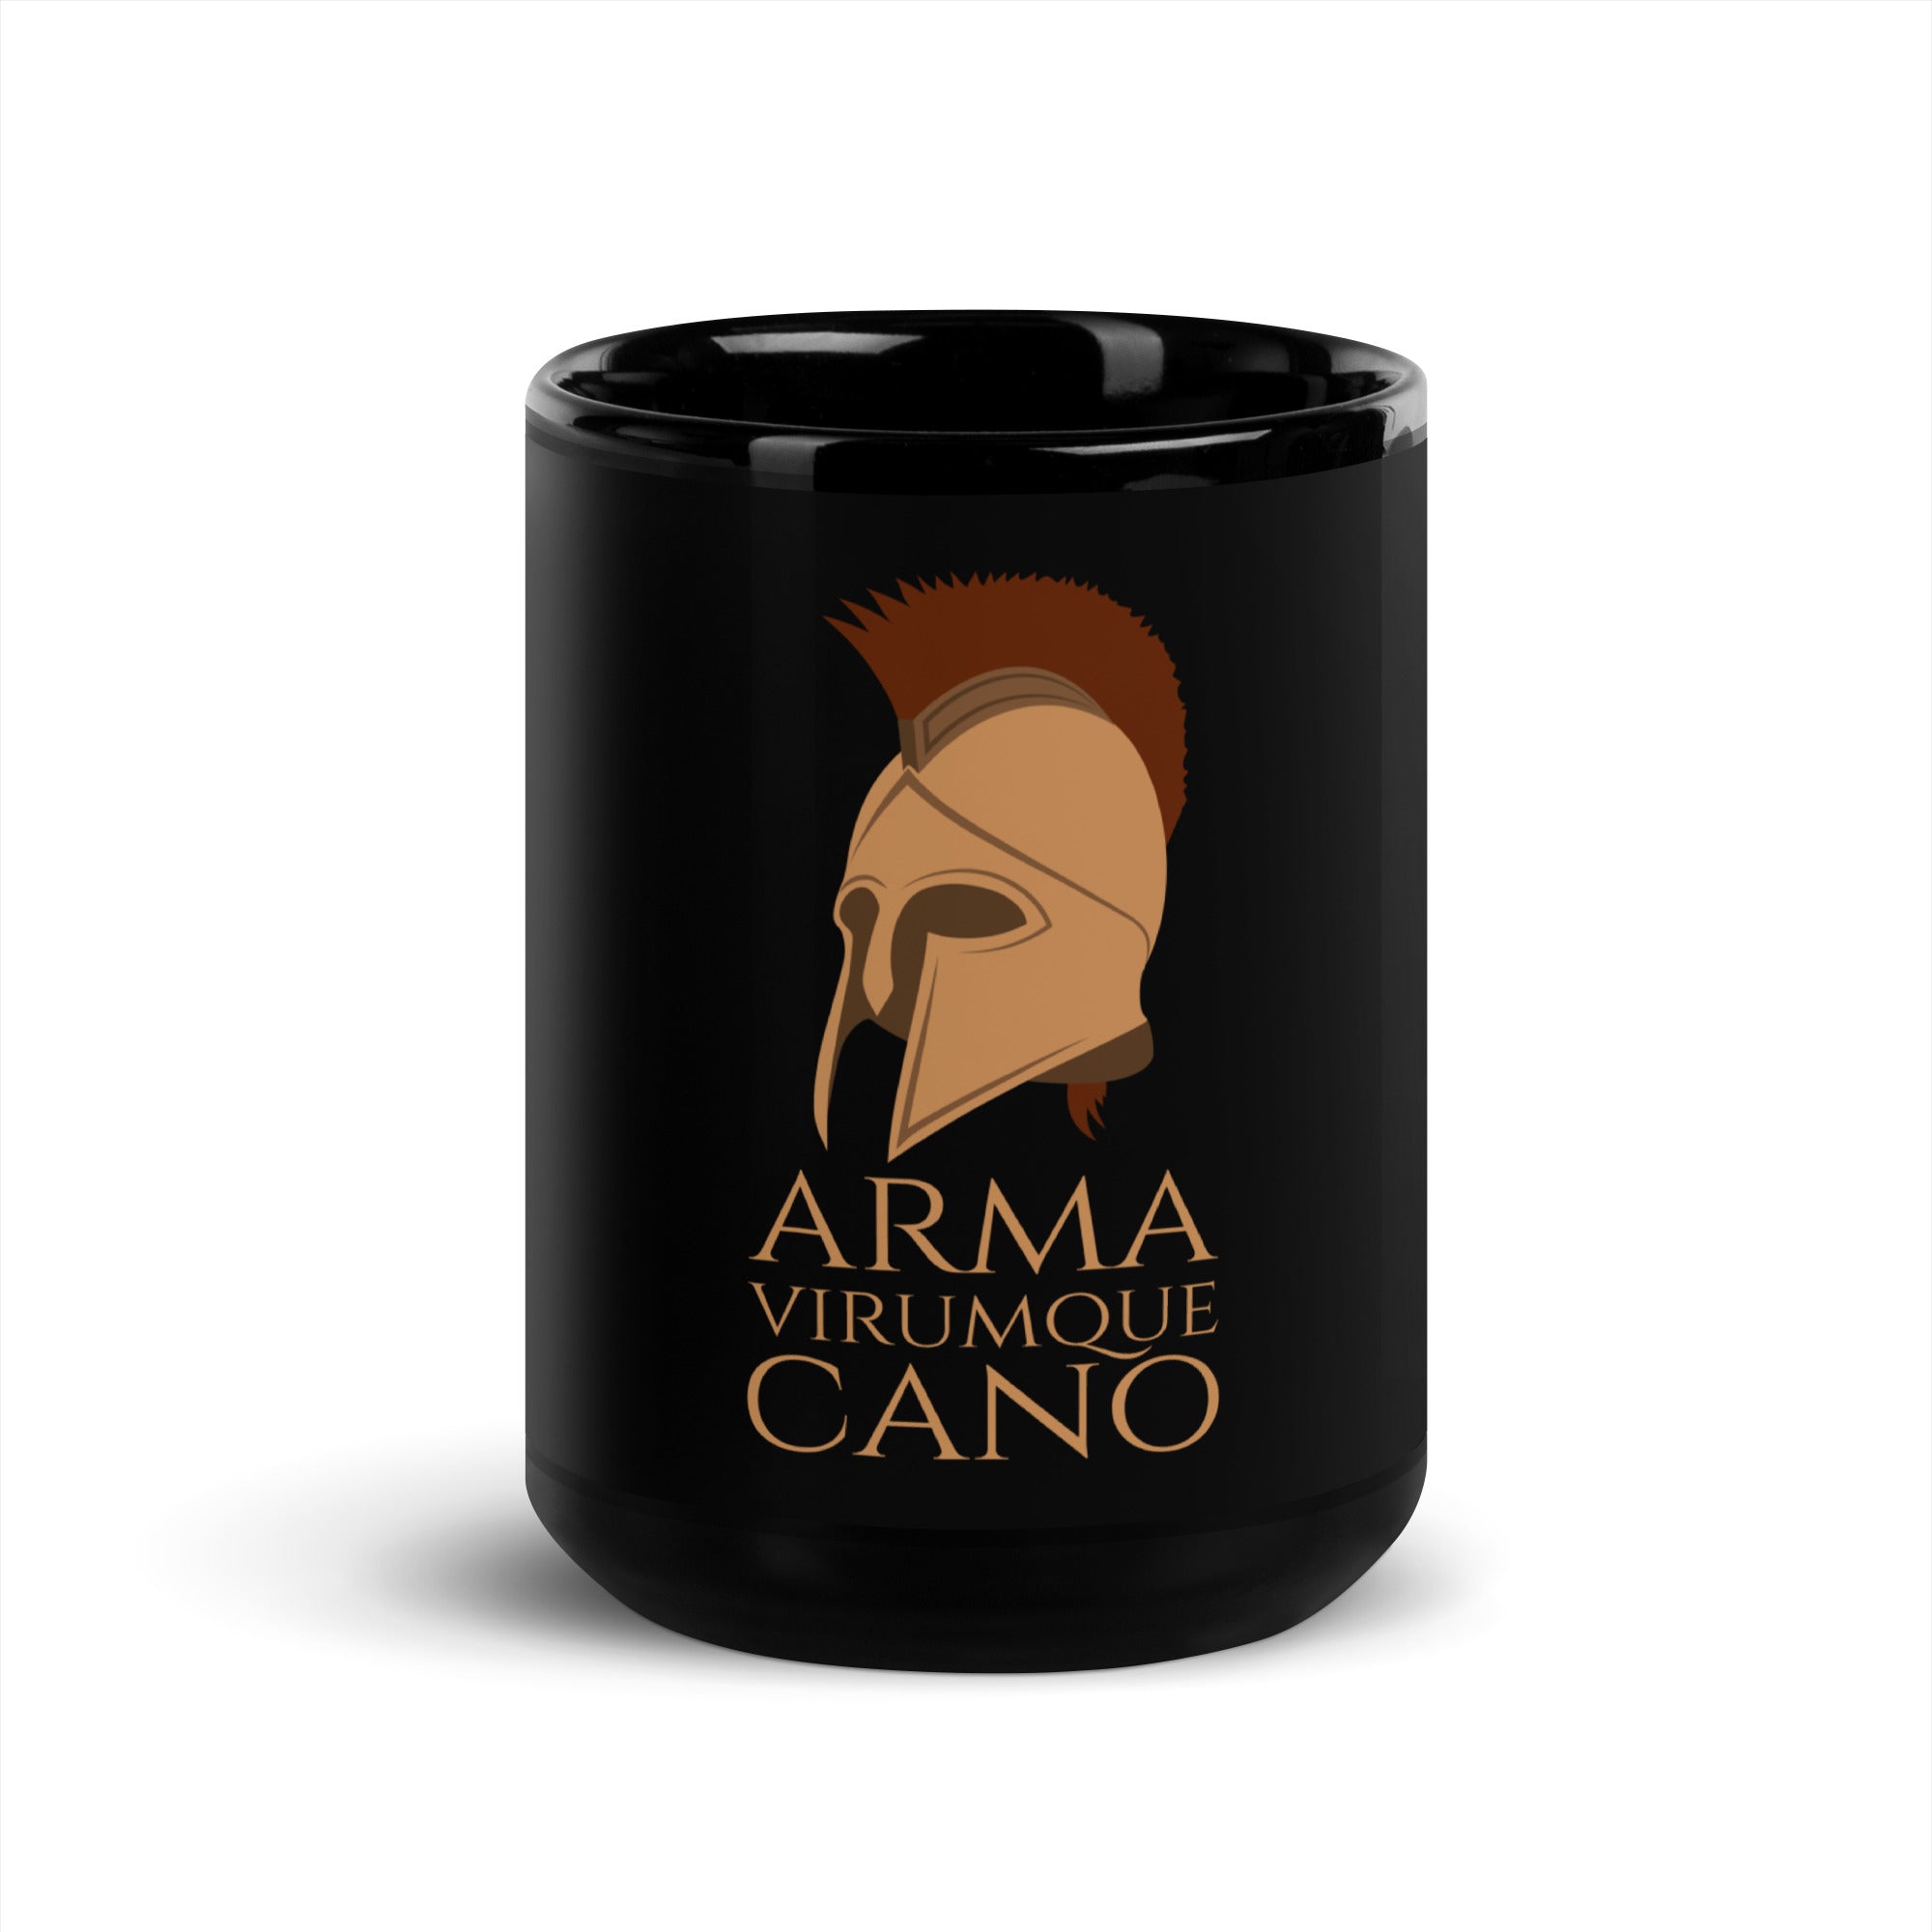 Arma Virumque Cano - I Sing Of Arms And The Man - The Aeneid Roman Mythology Black Glossy Mug